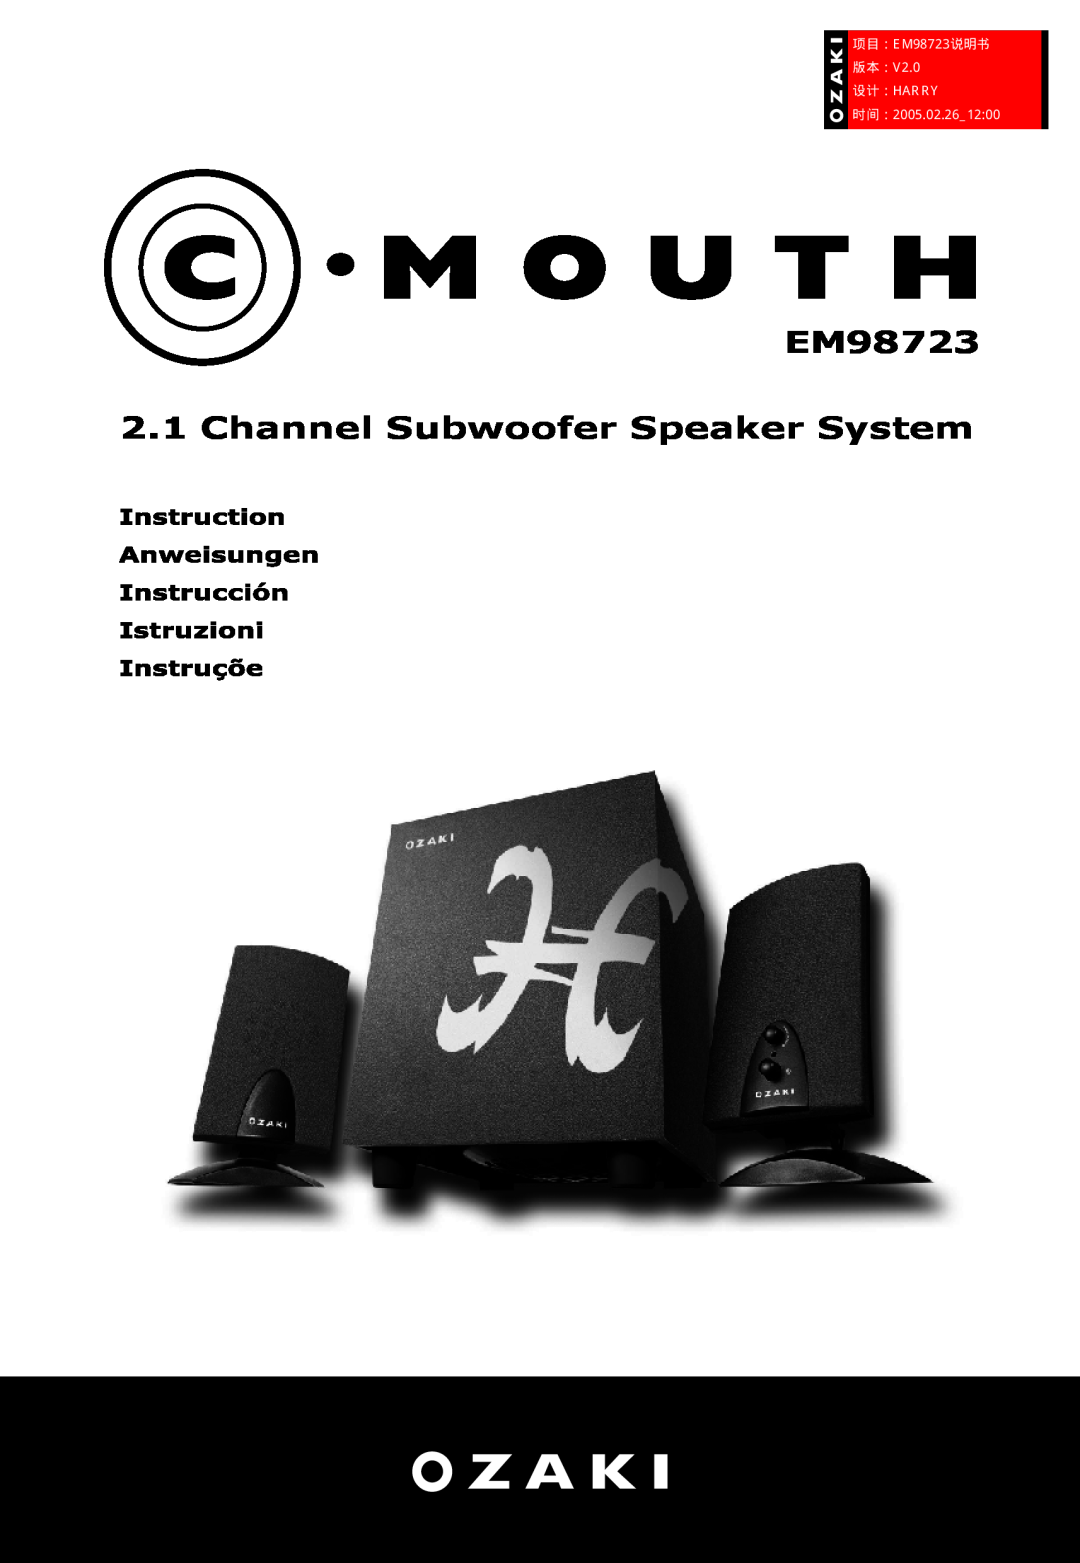 Ozaki Worldwide manual EM98723 2.1 Channel Subwoofer Speaker System, 项目：EM98723说明书 版本：V2.0 设计：HARRY, 时间：2005.02.26 